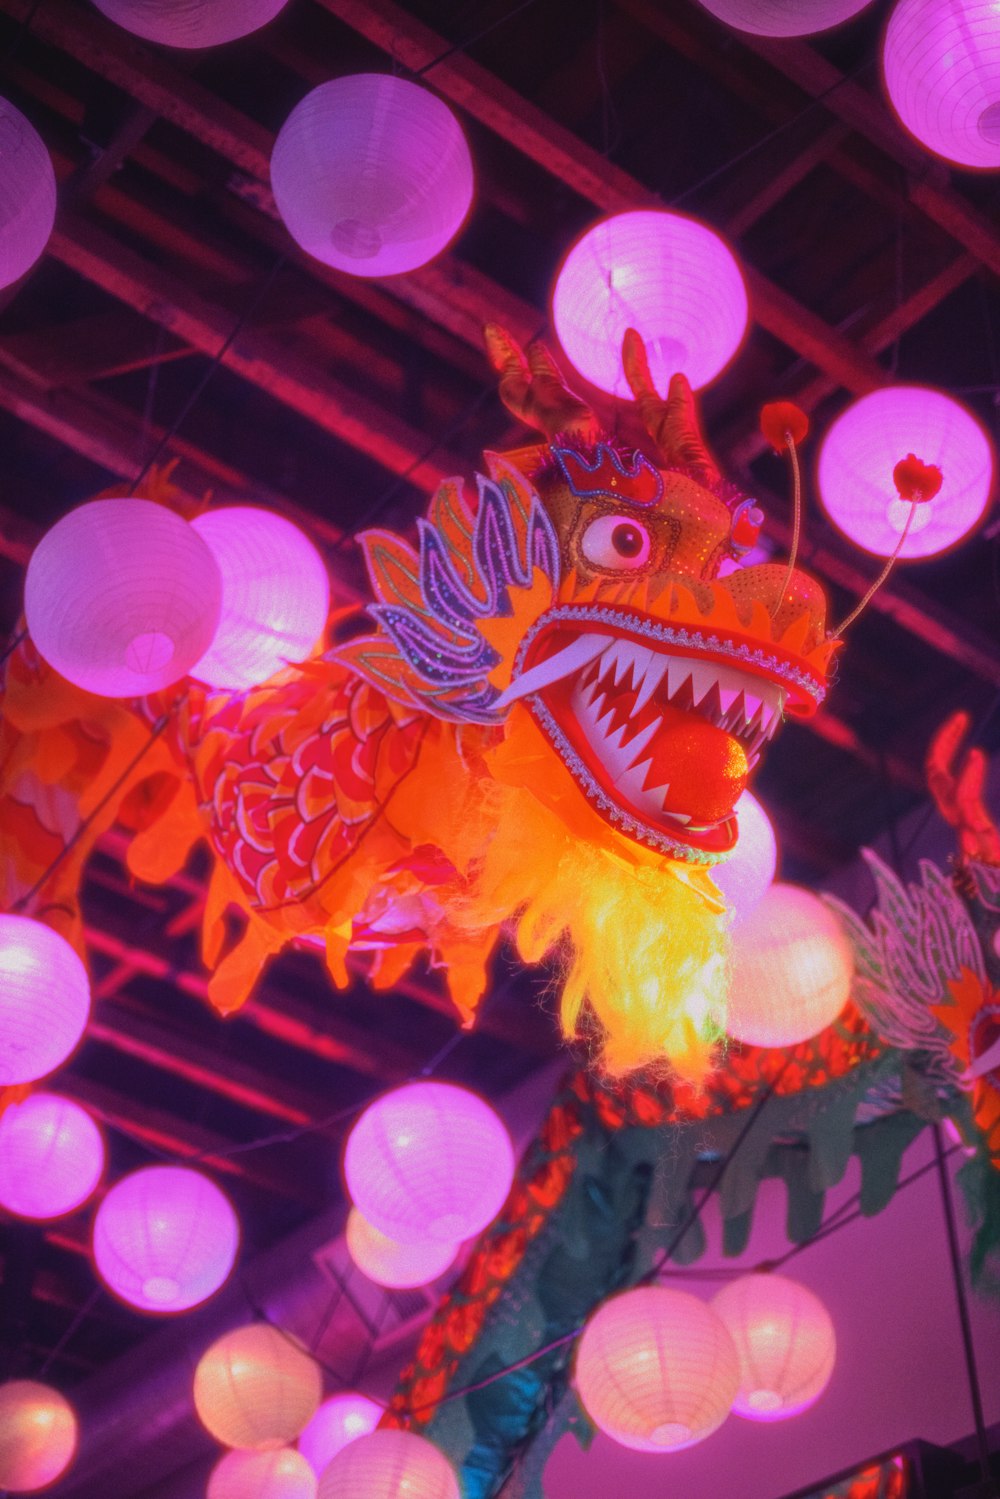 a dragon lantern is lit up in the dark